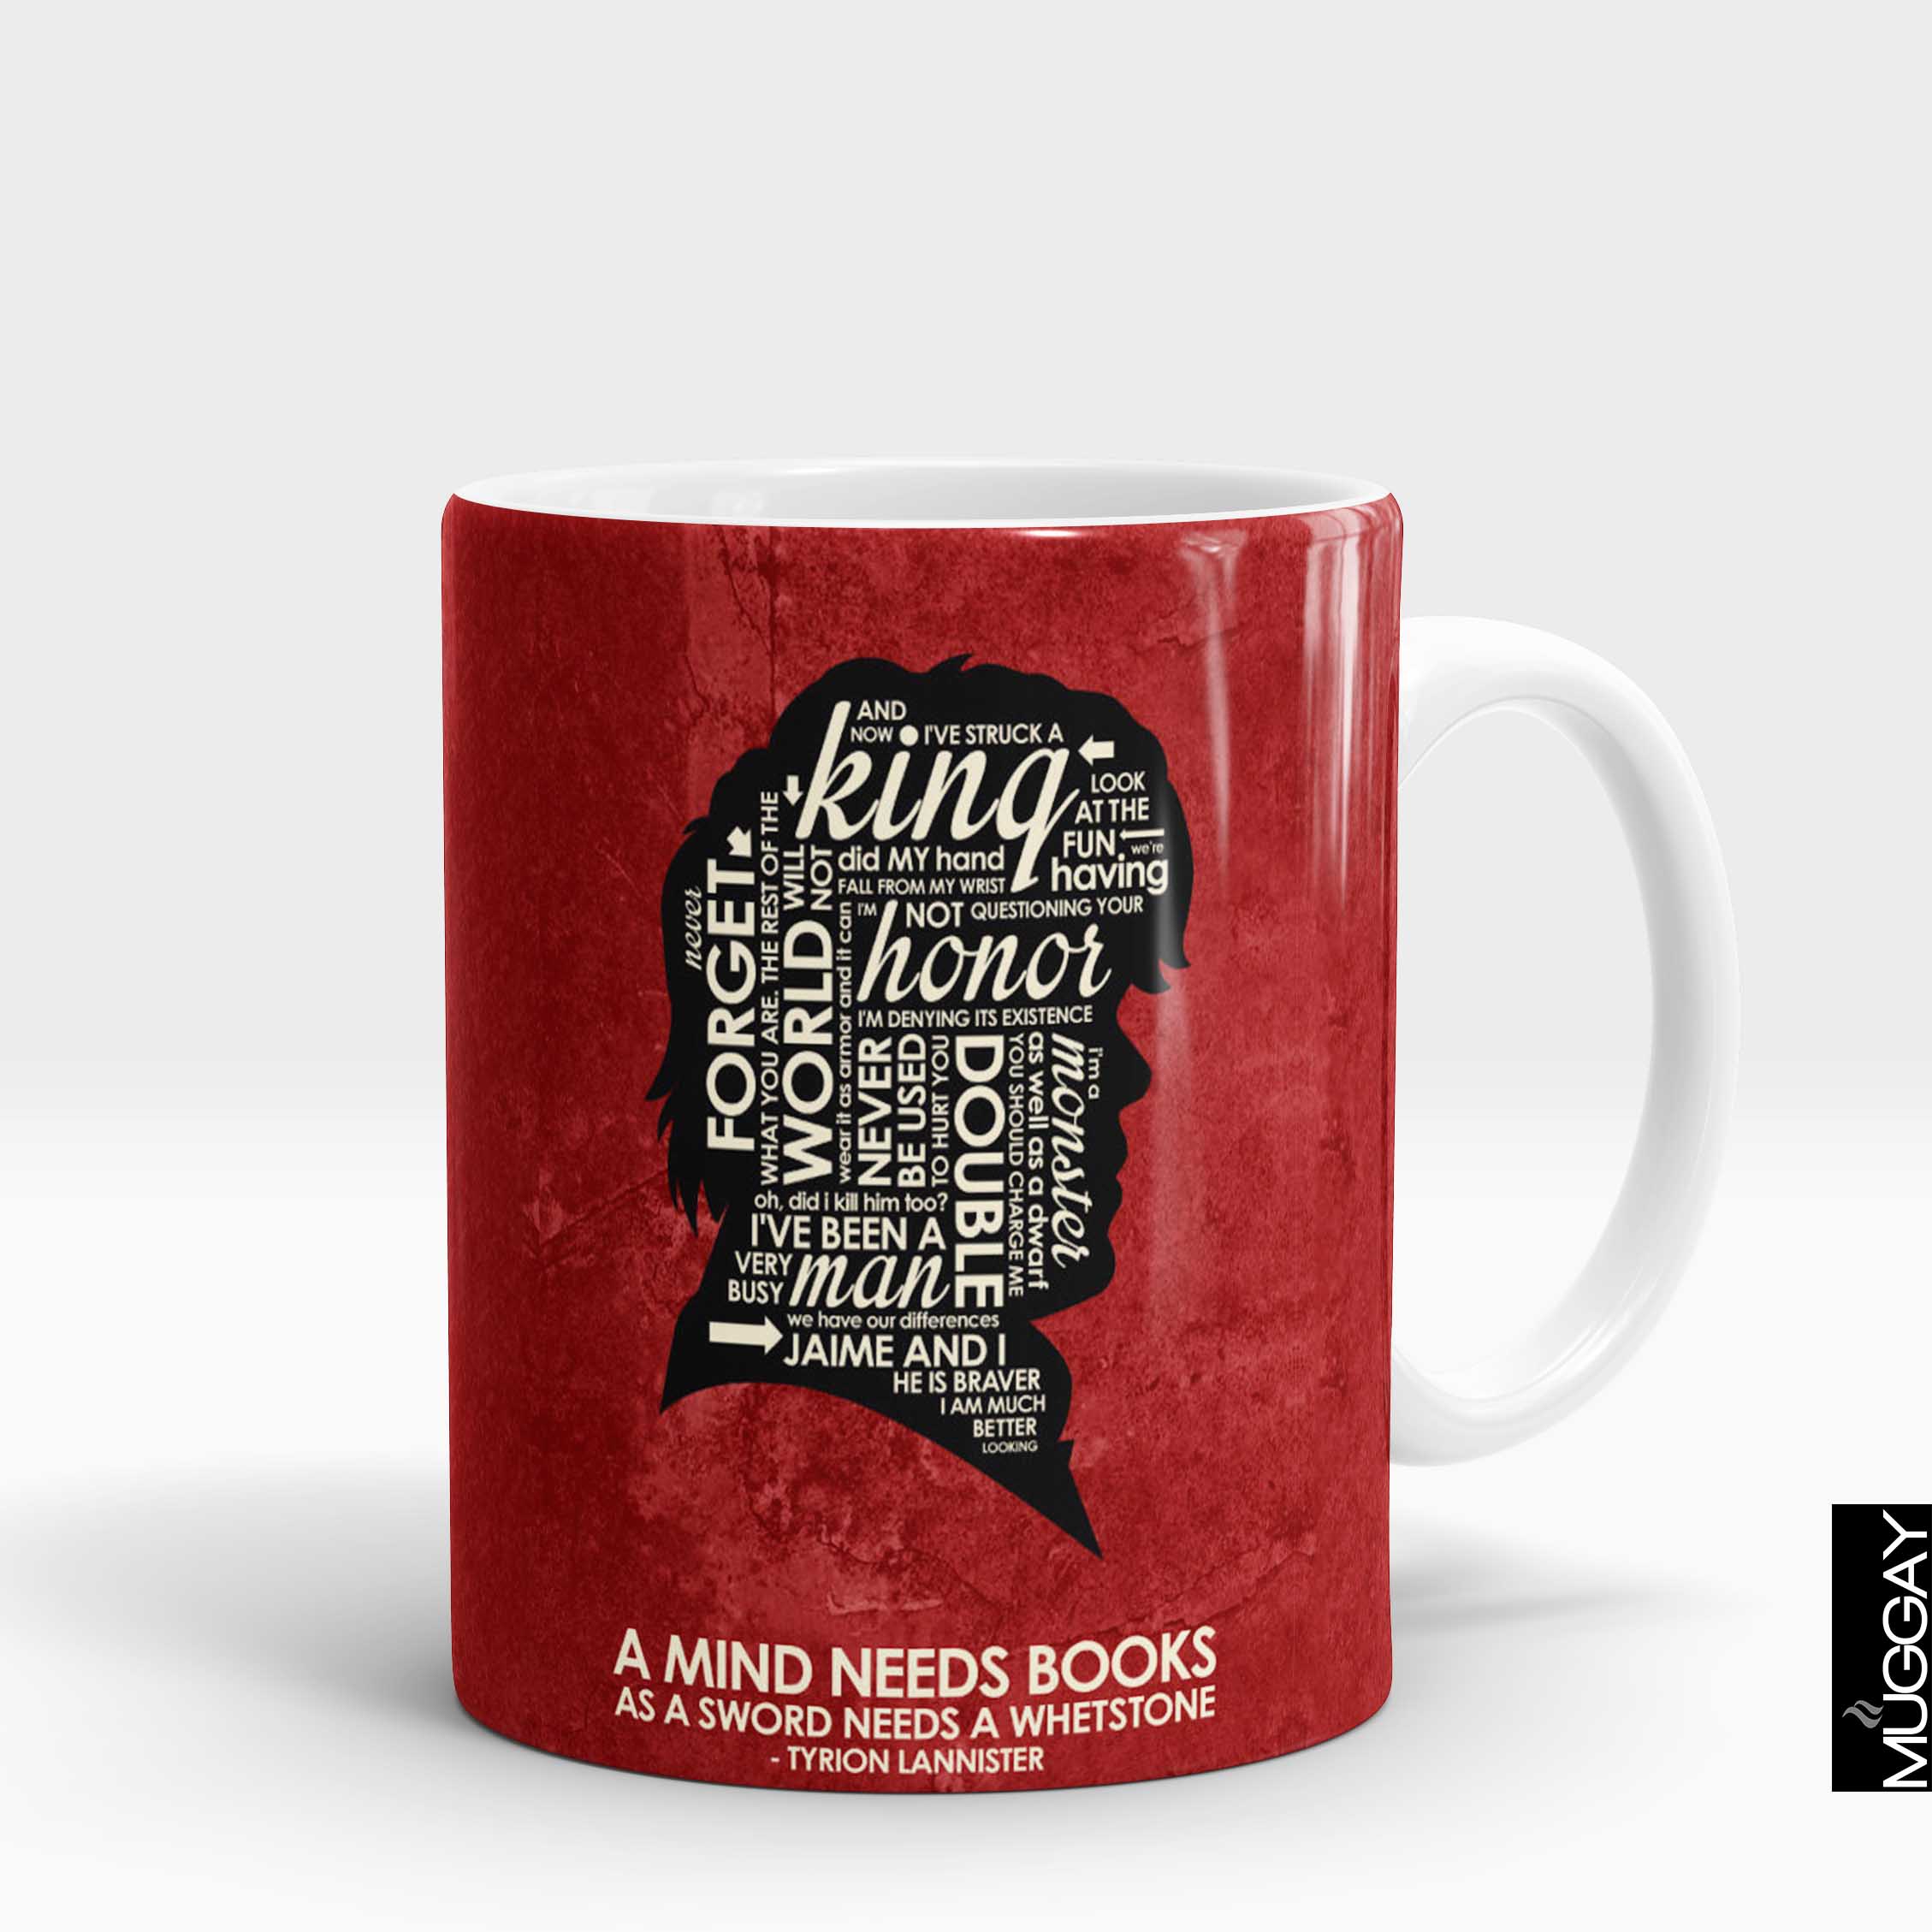 Game of thrones mugs -15